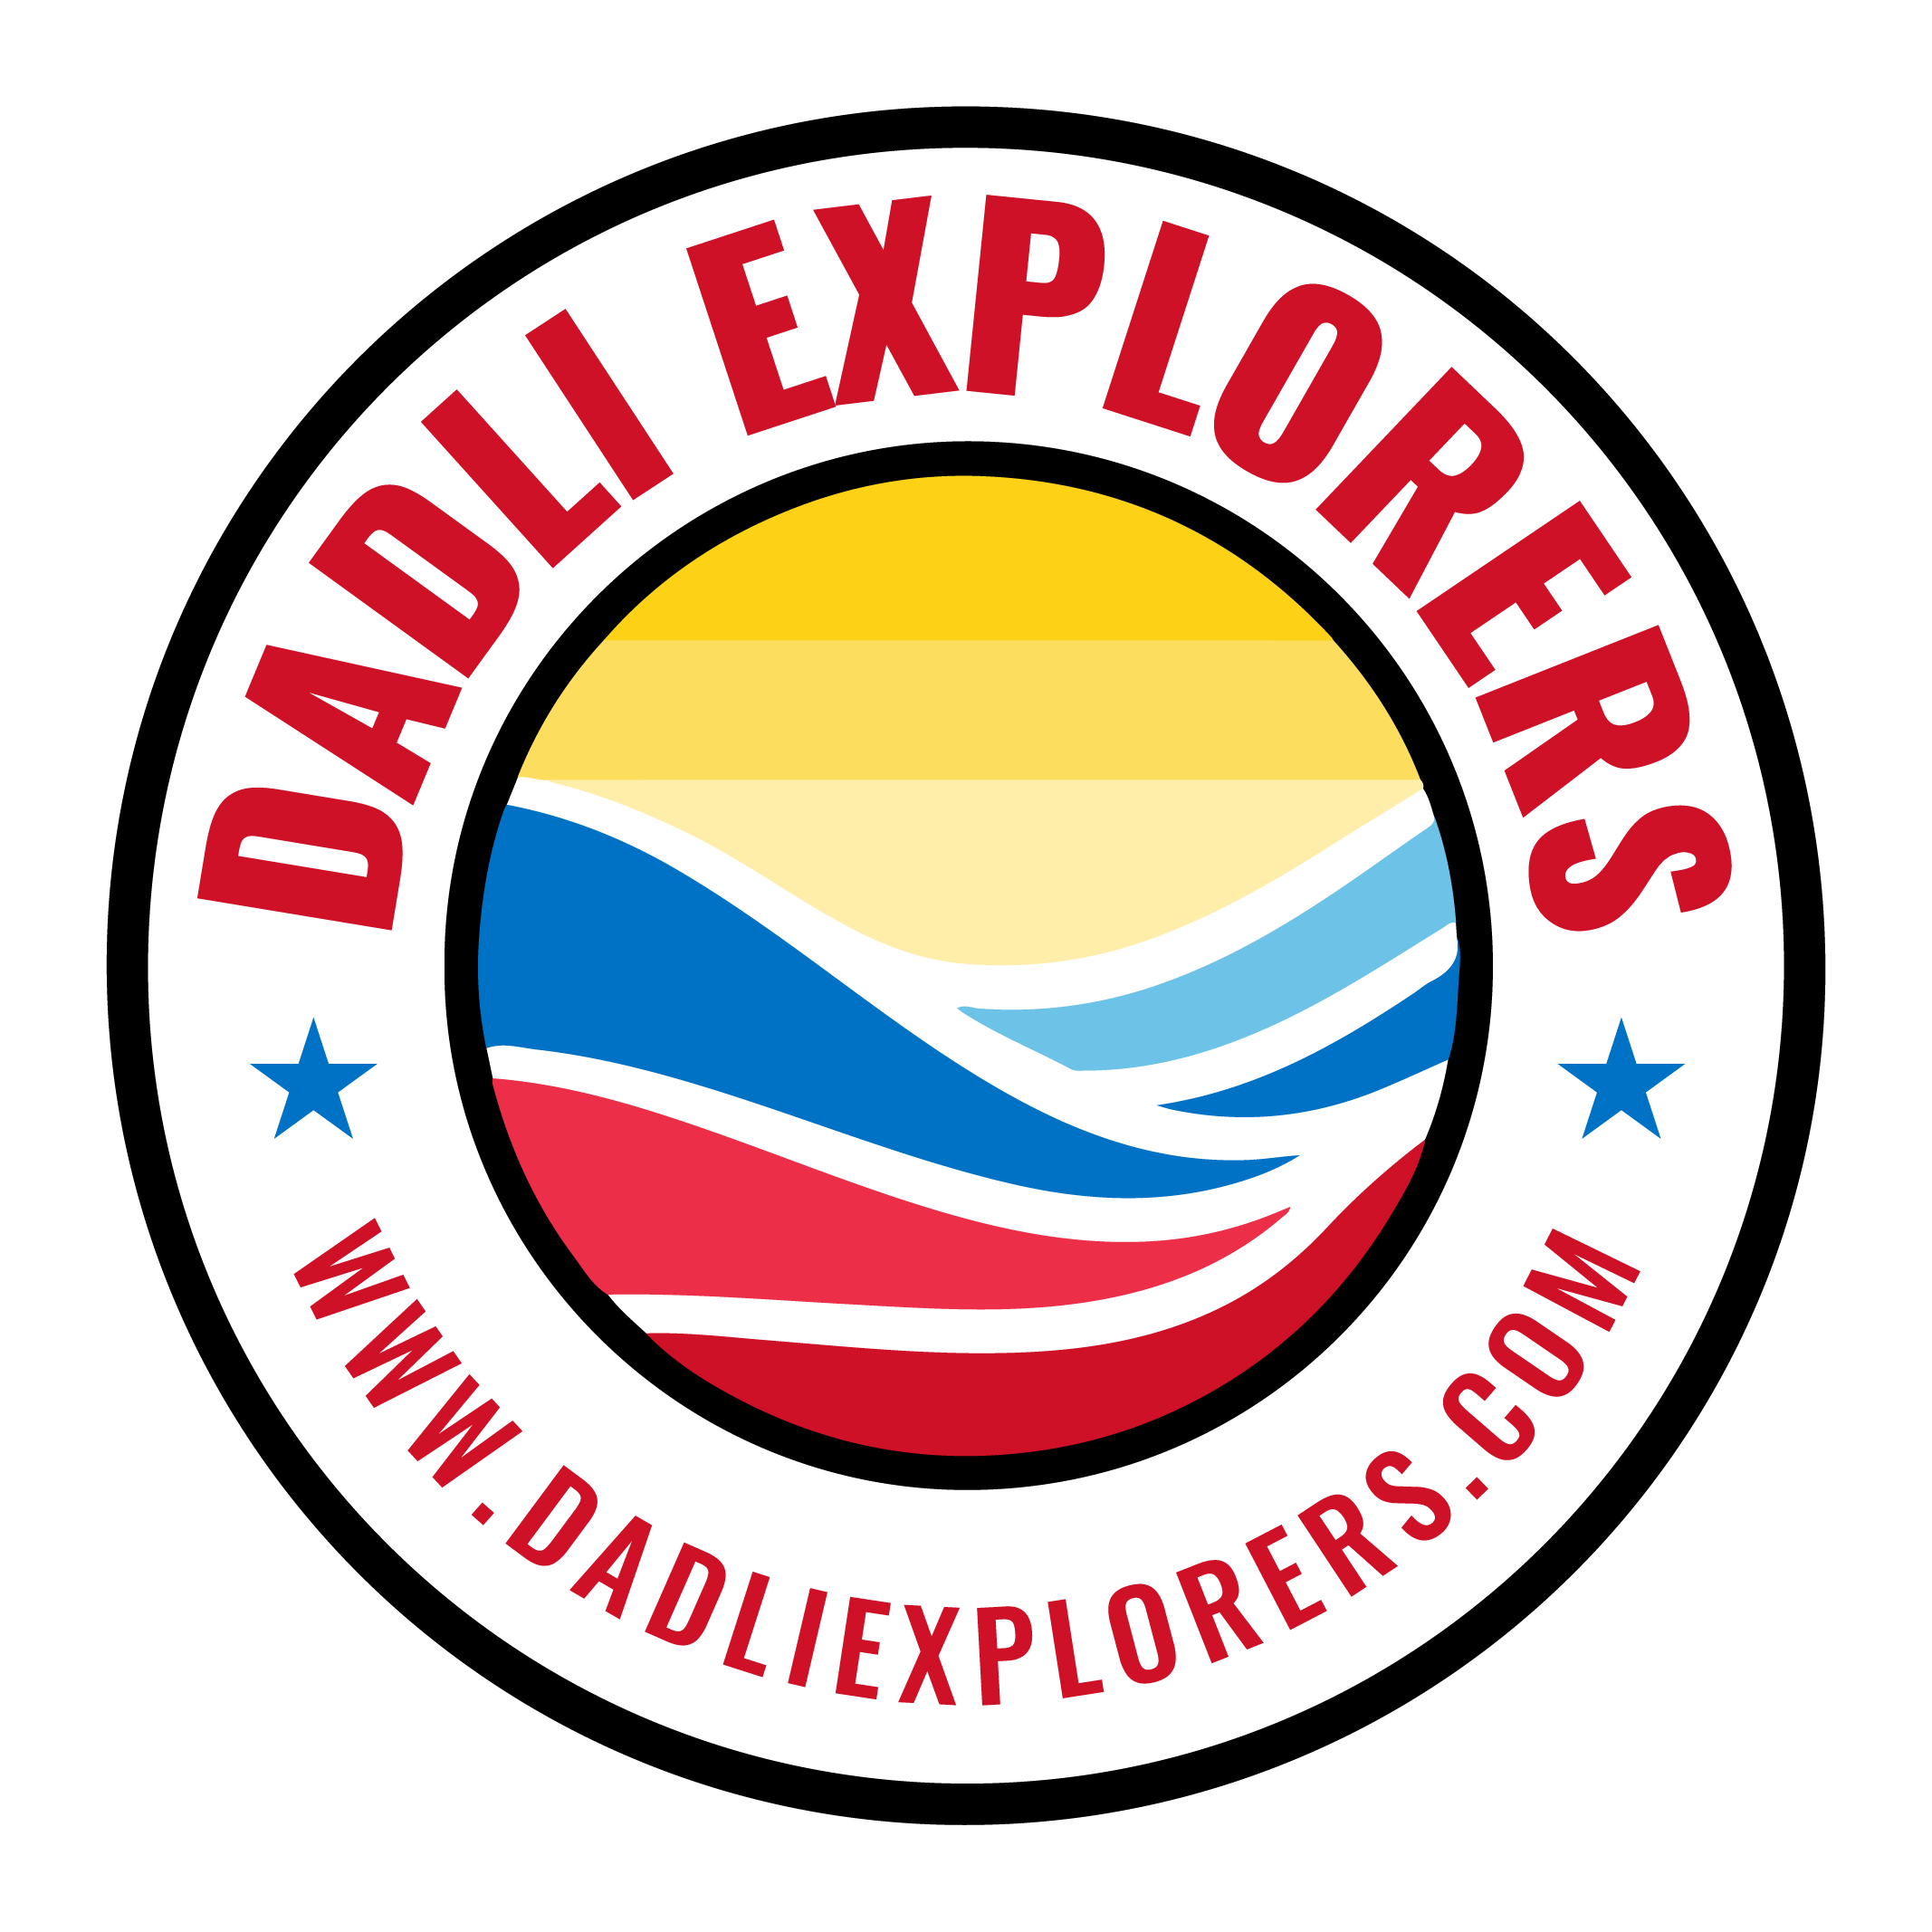 The Dadli Explorers 